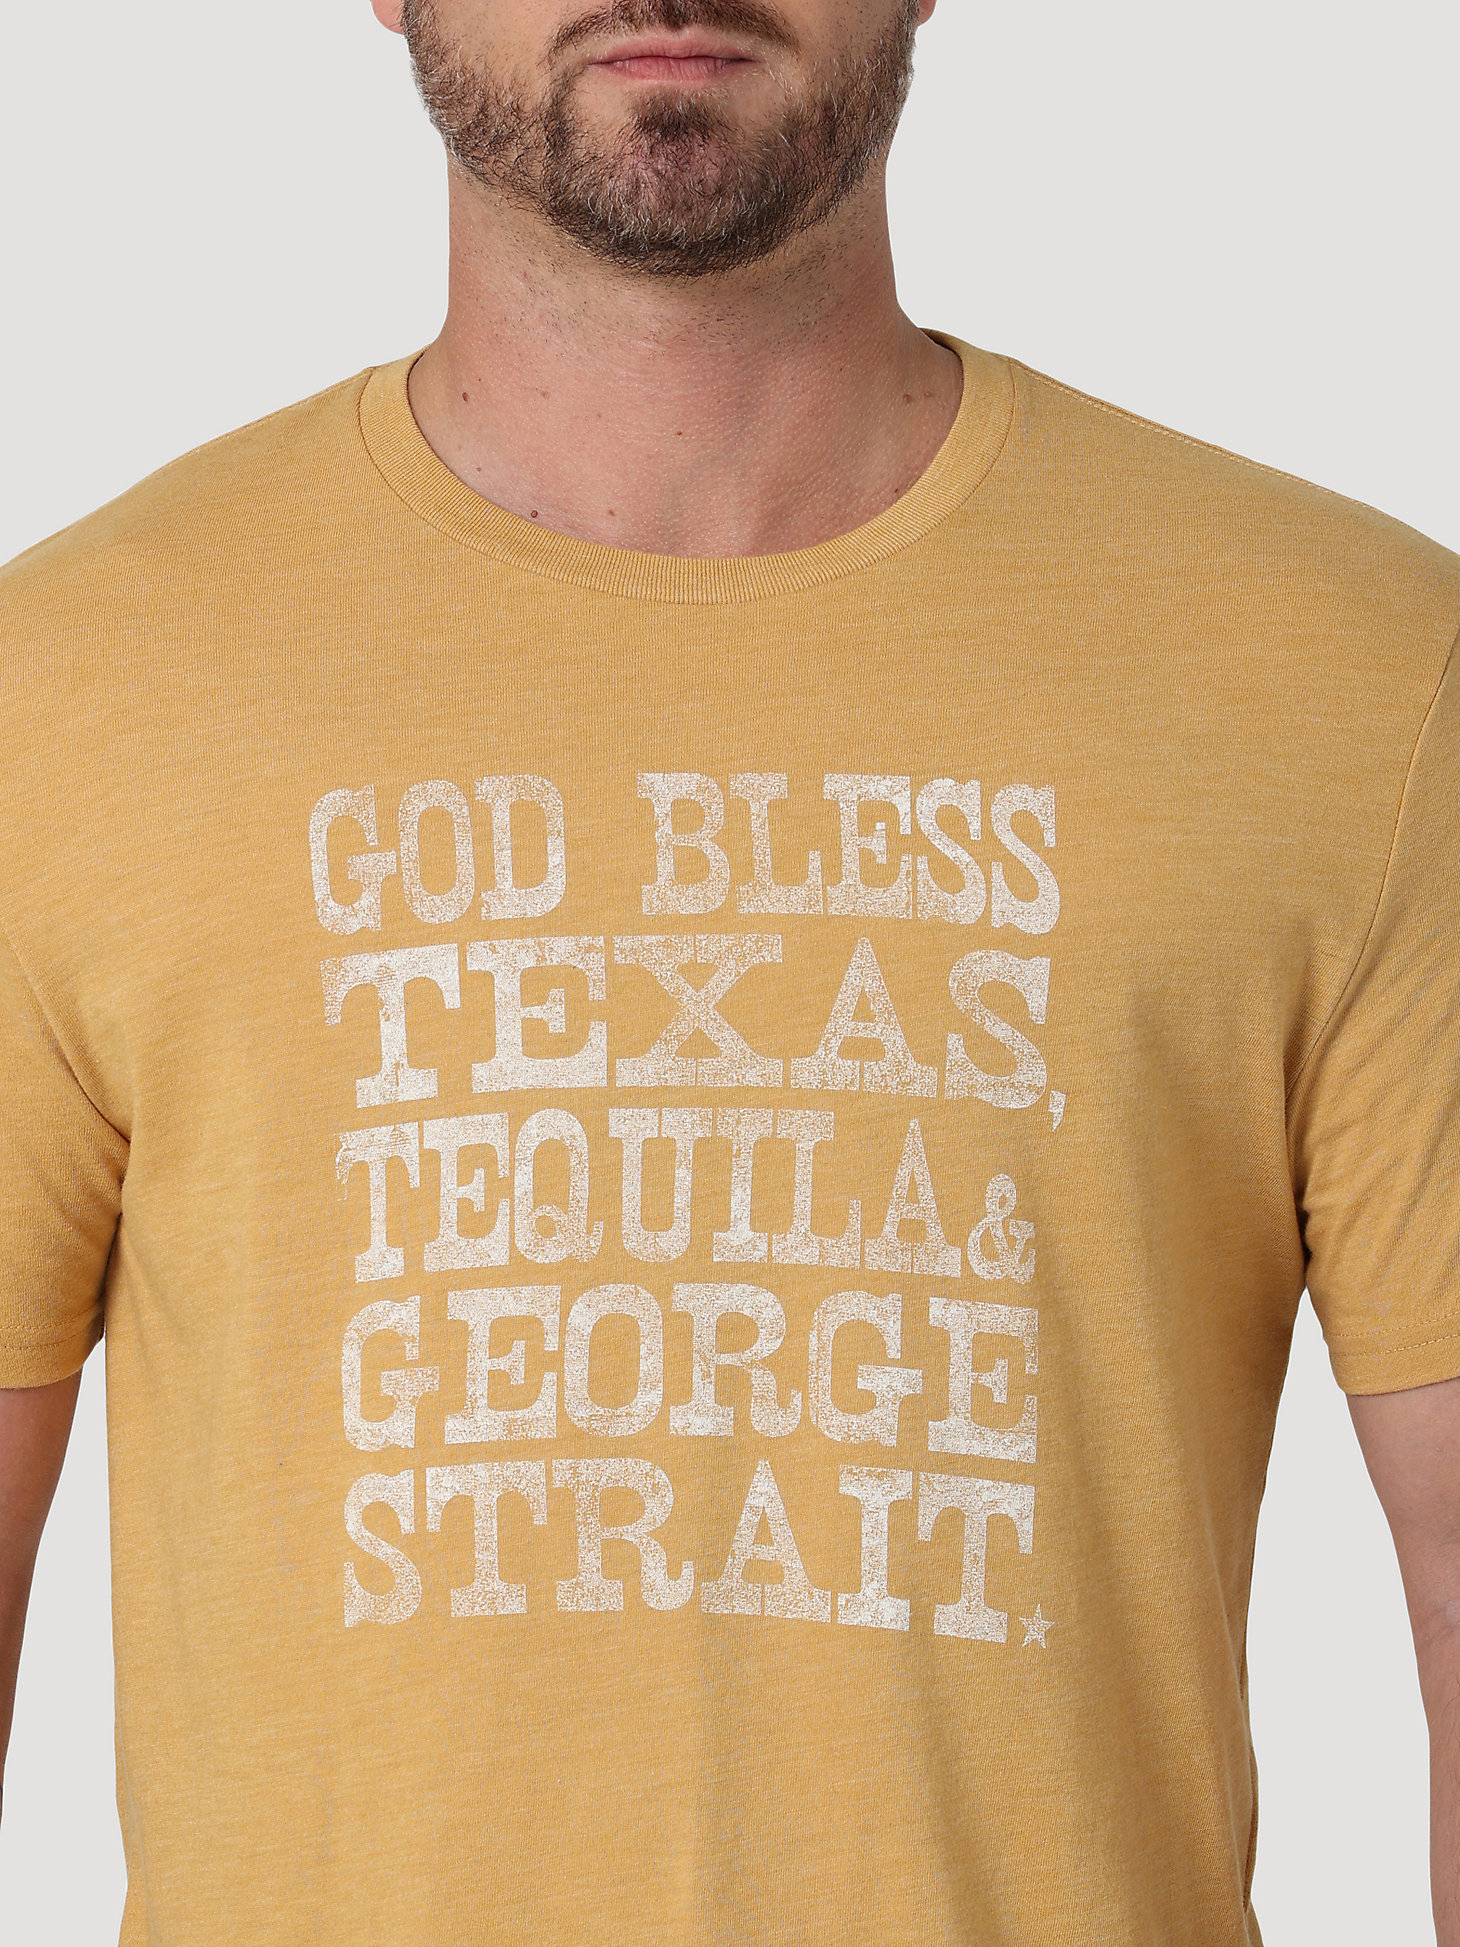 Men's George Strait Short Sleeve Graphic T-Shirt in Pale Gold Heather alternative view 2